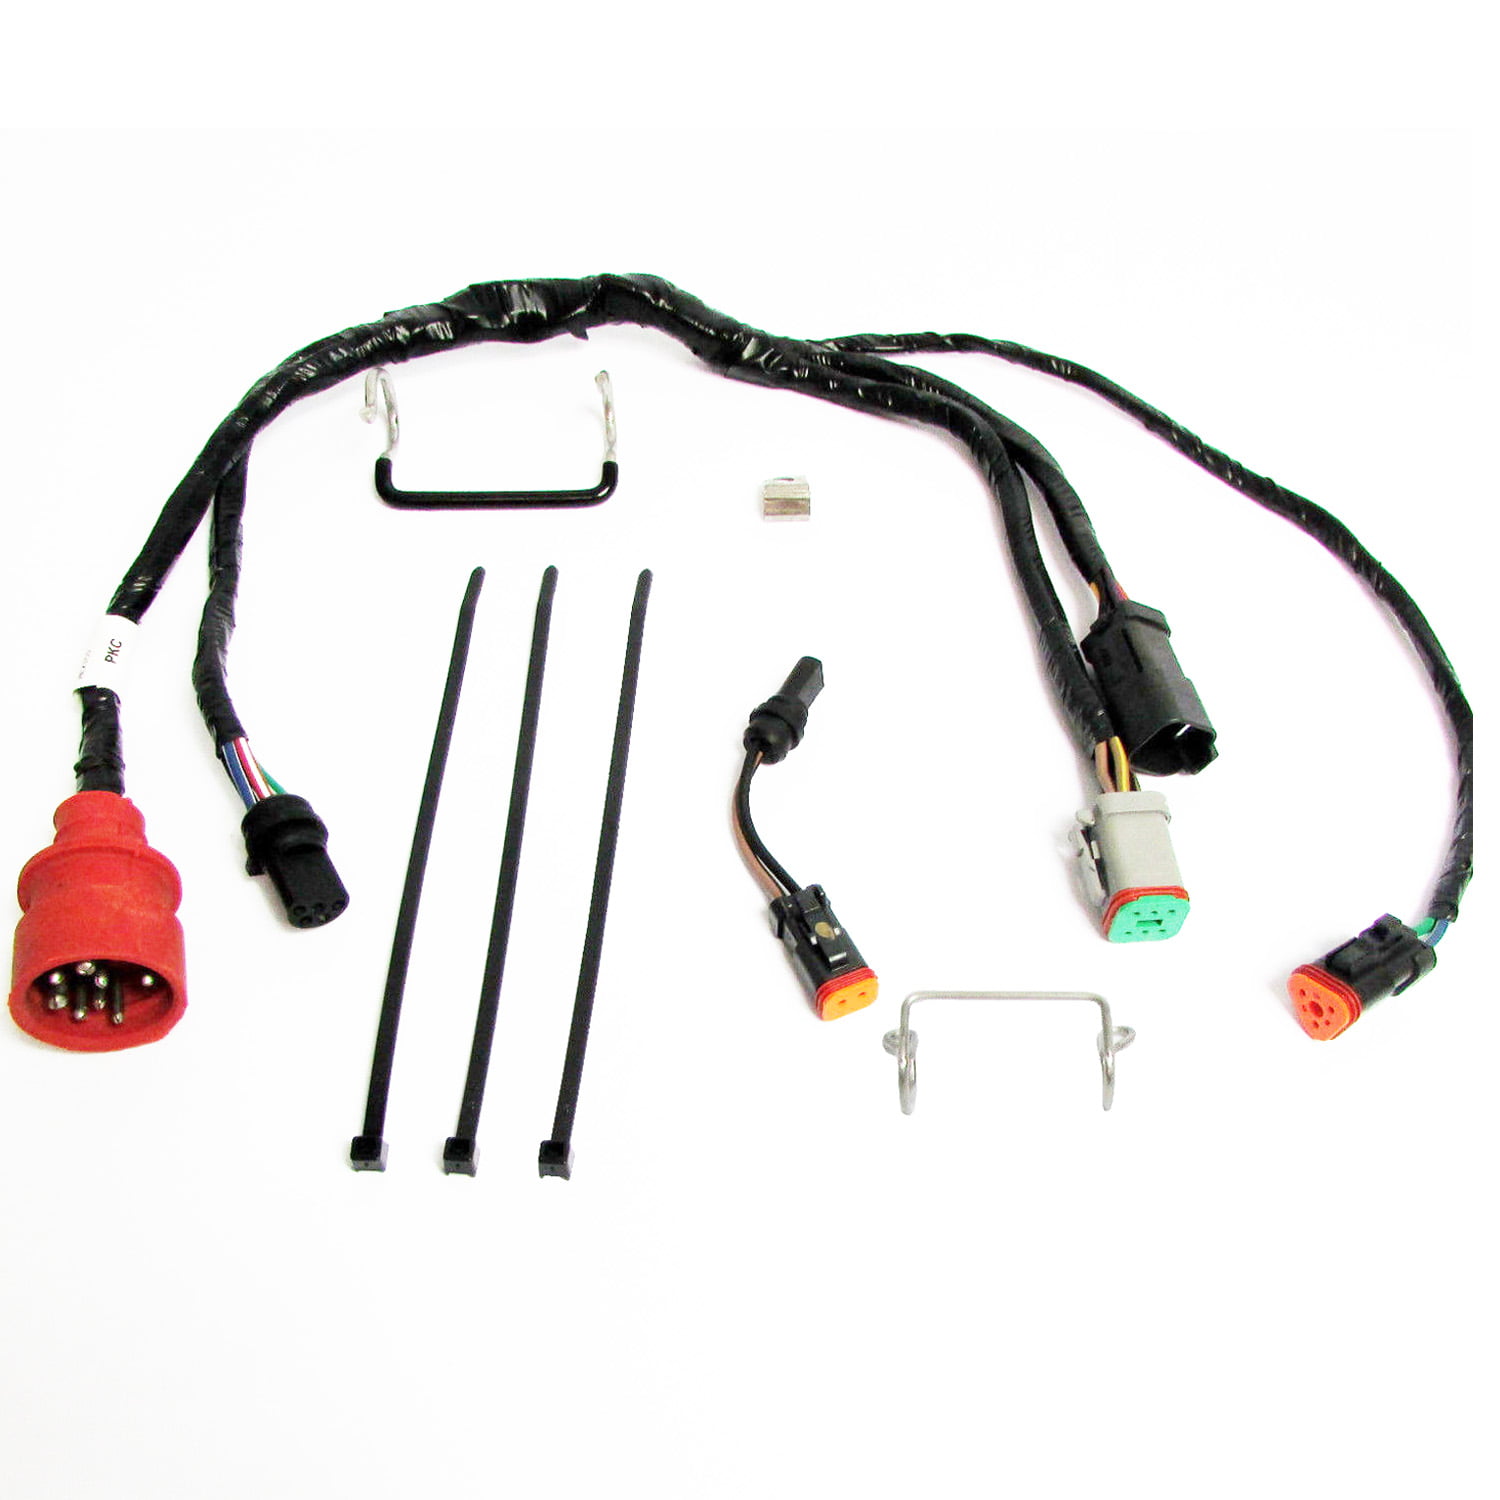 CDI 423-6344 Johnson Evinrude Adapter Harness 